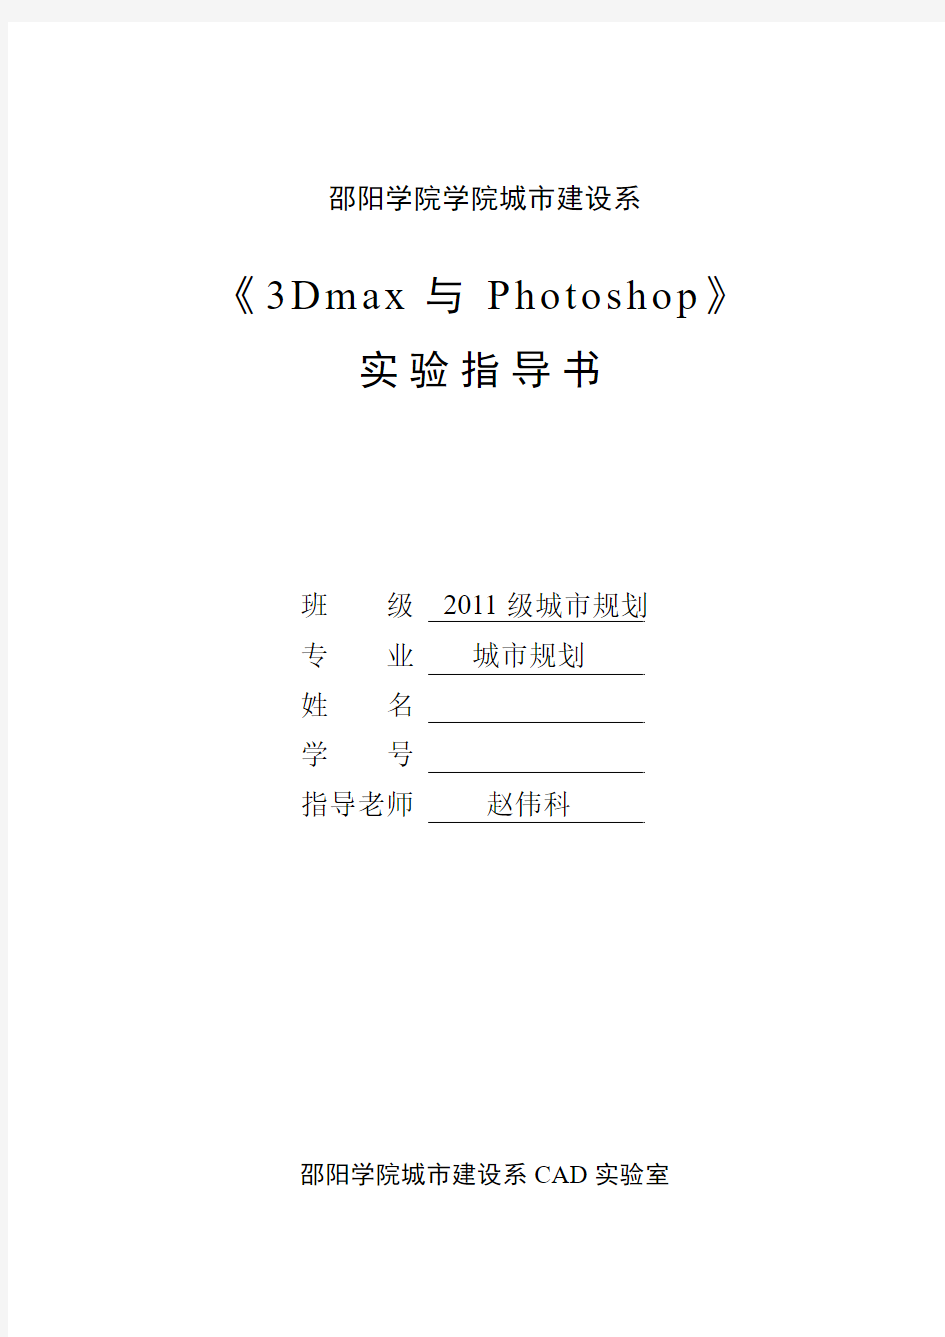 《3Dmax与Photoshop》试验指导书